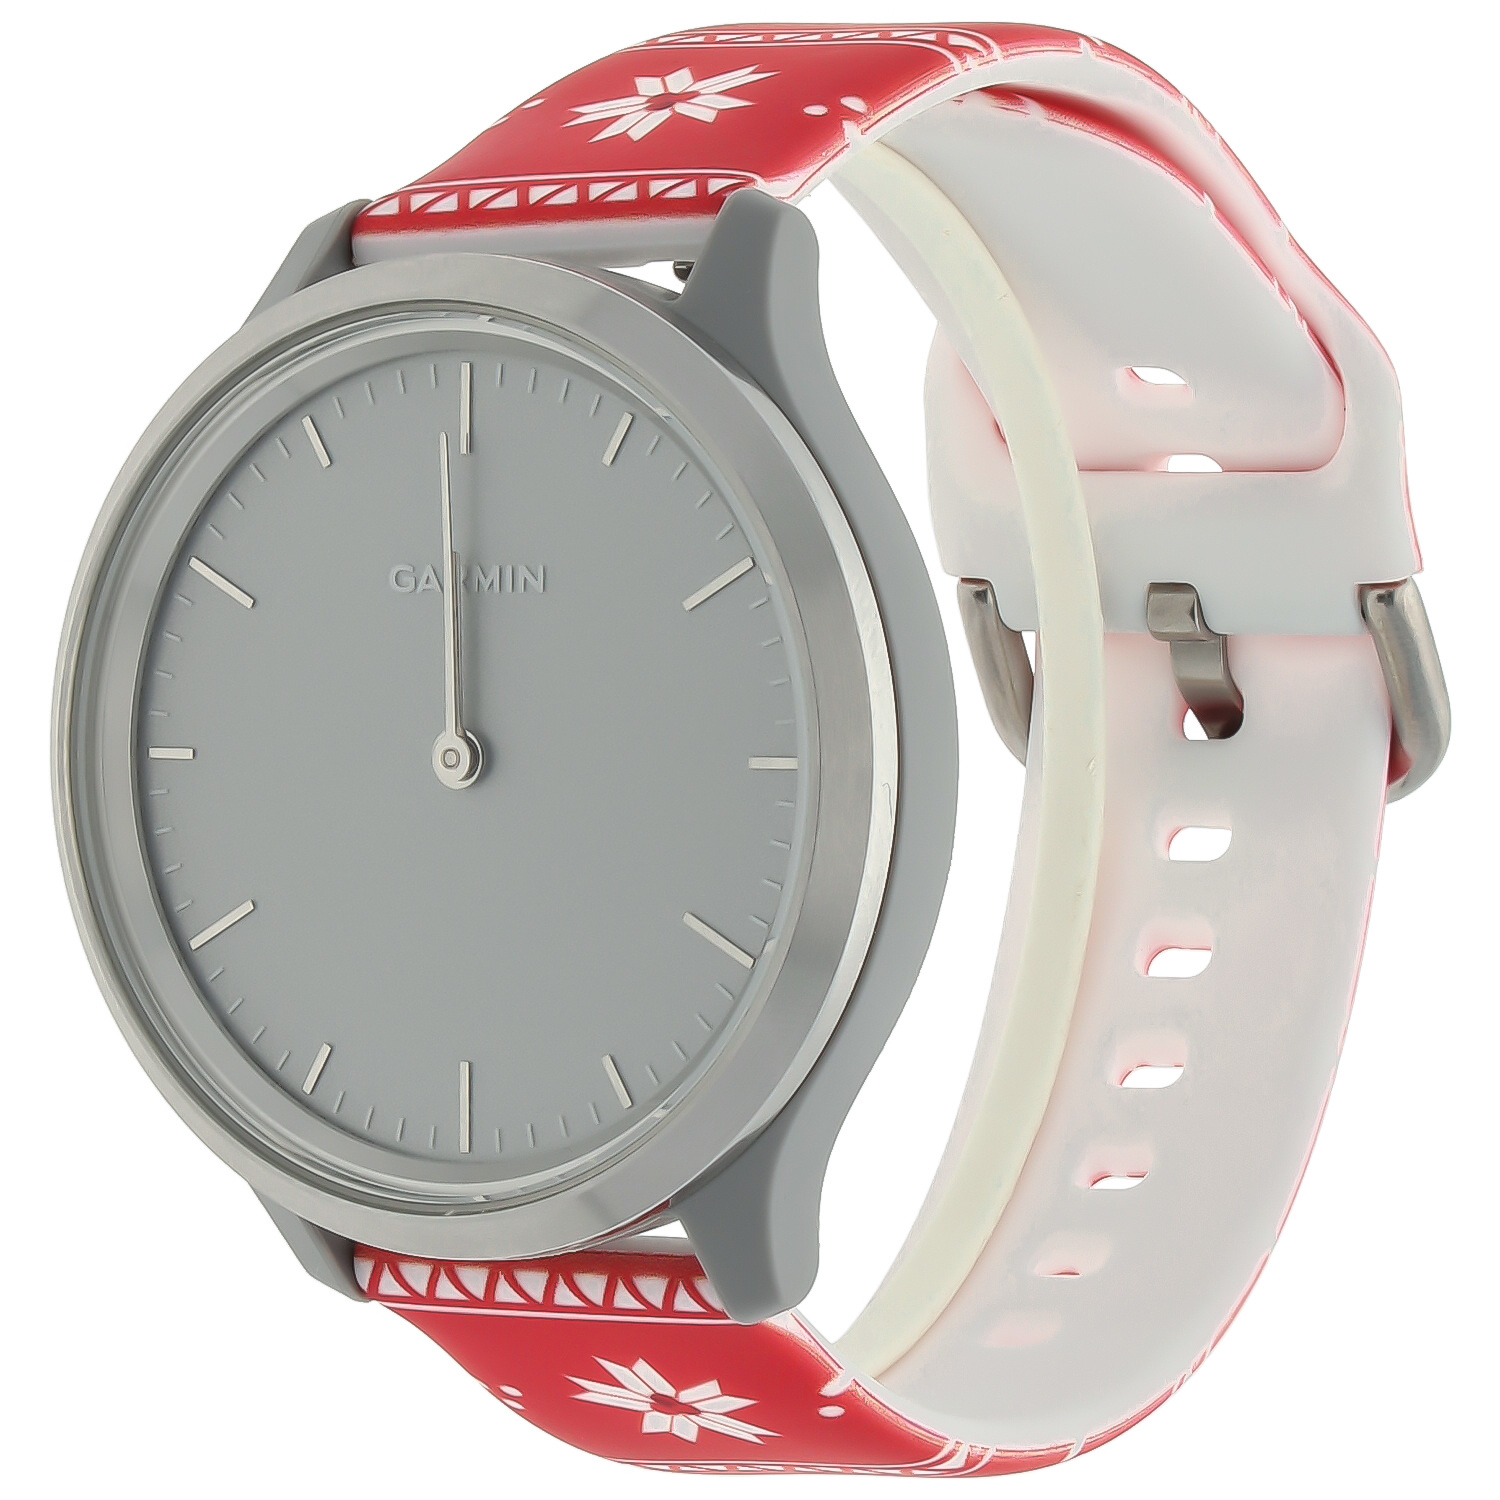 Samsung Galaxy Watch Print Sport Strap - Christmas Star Red